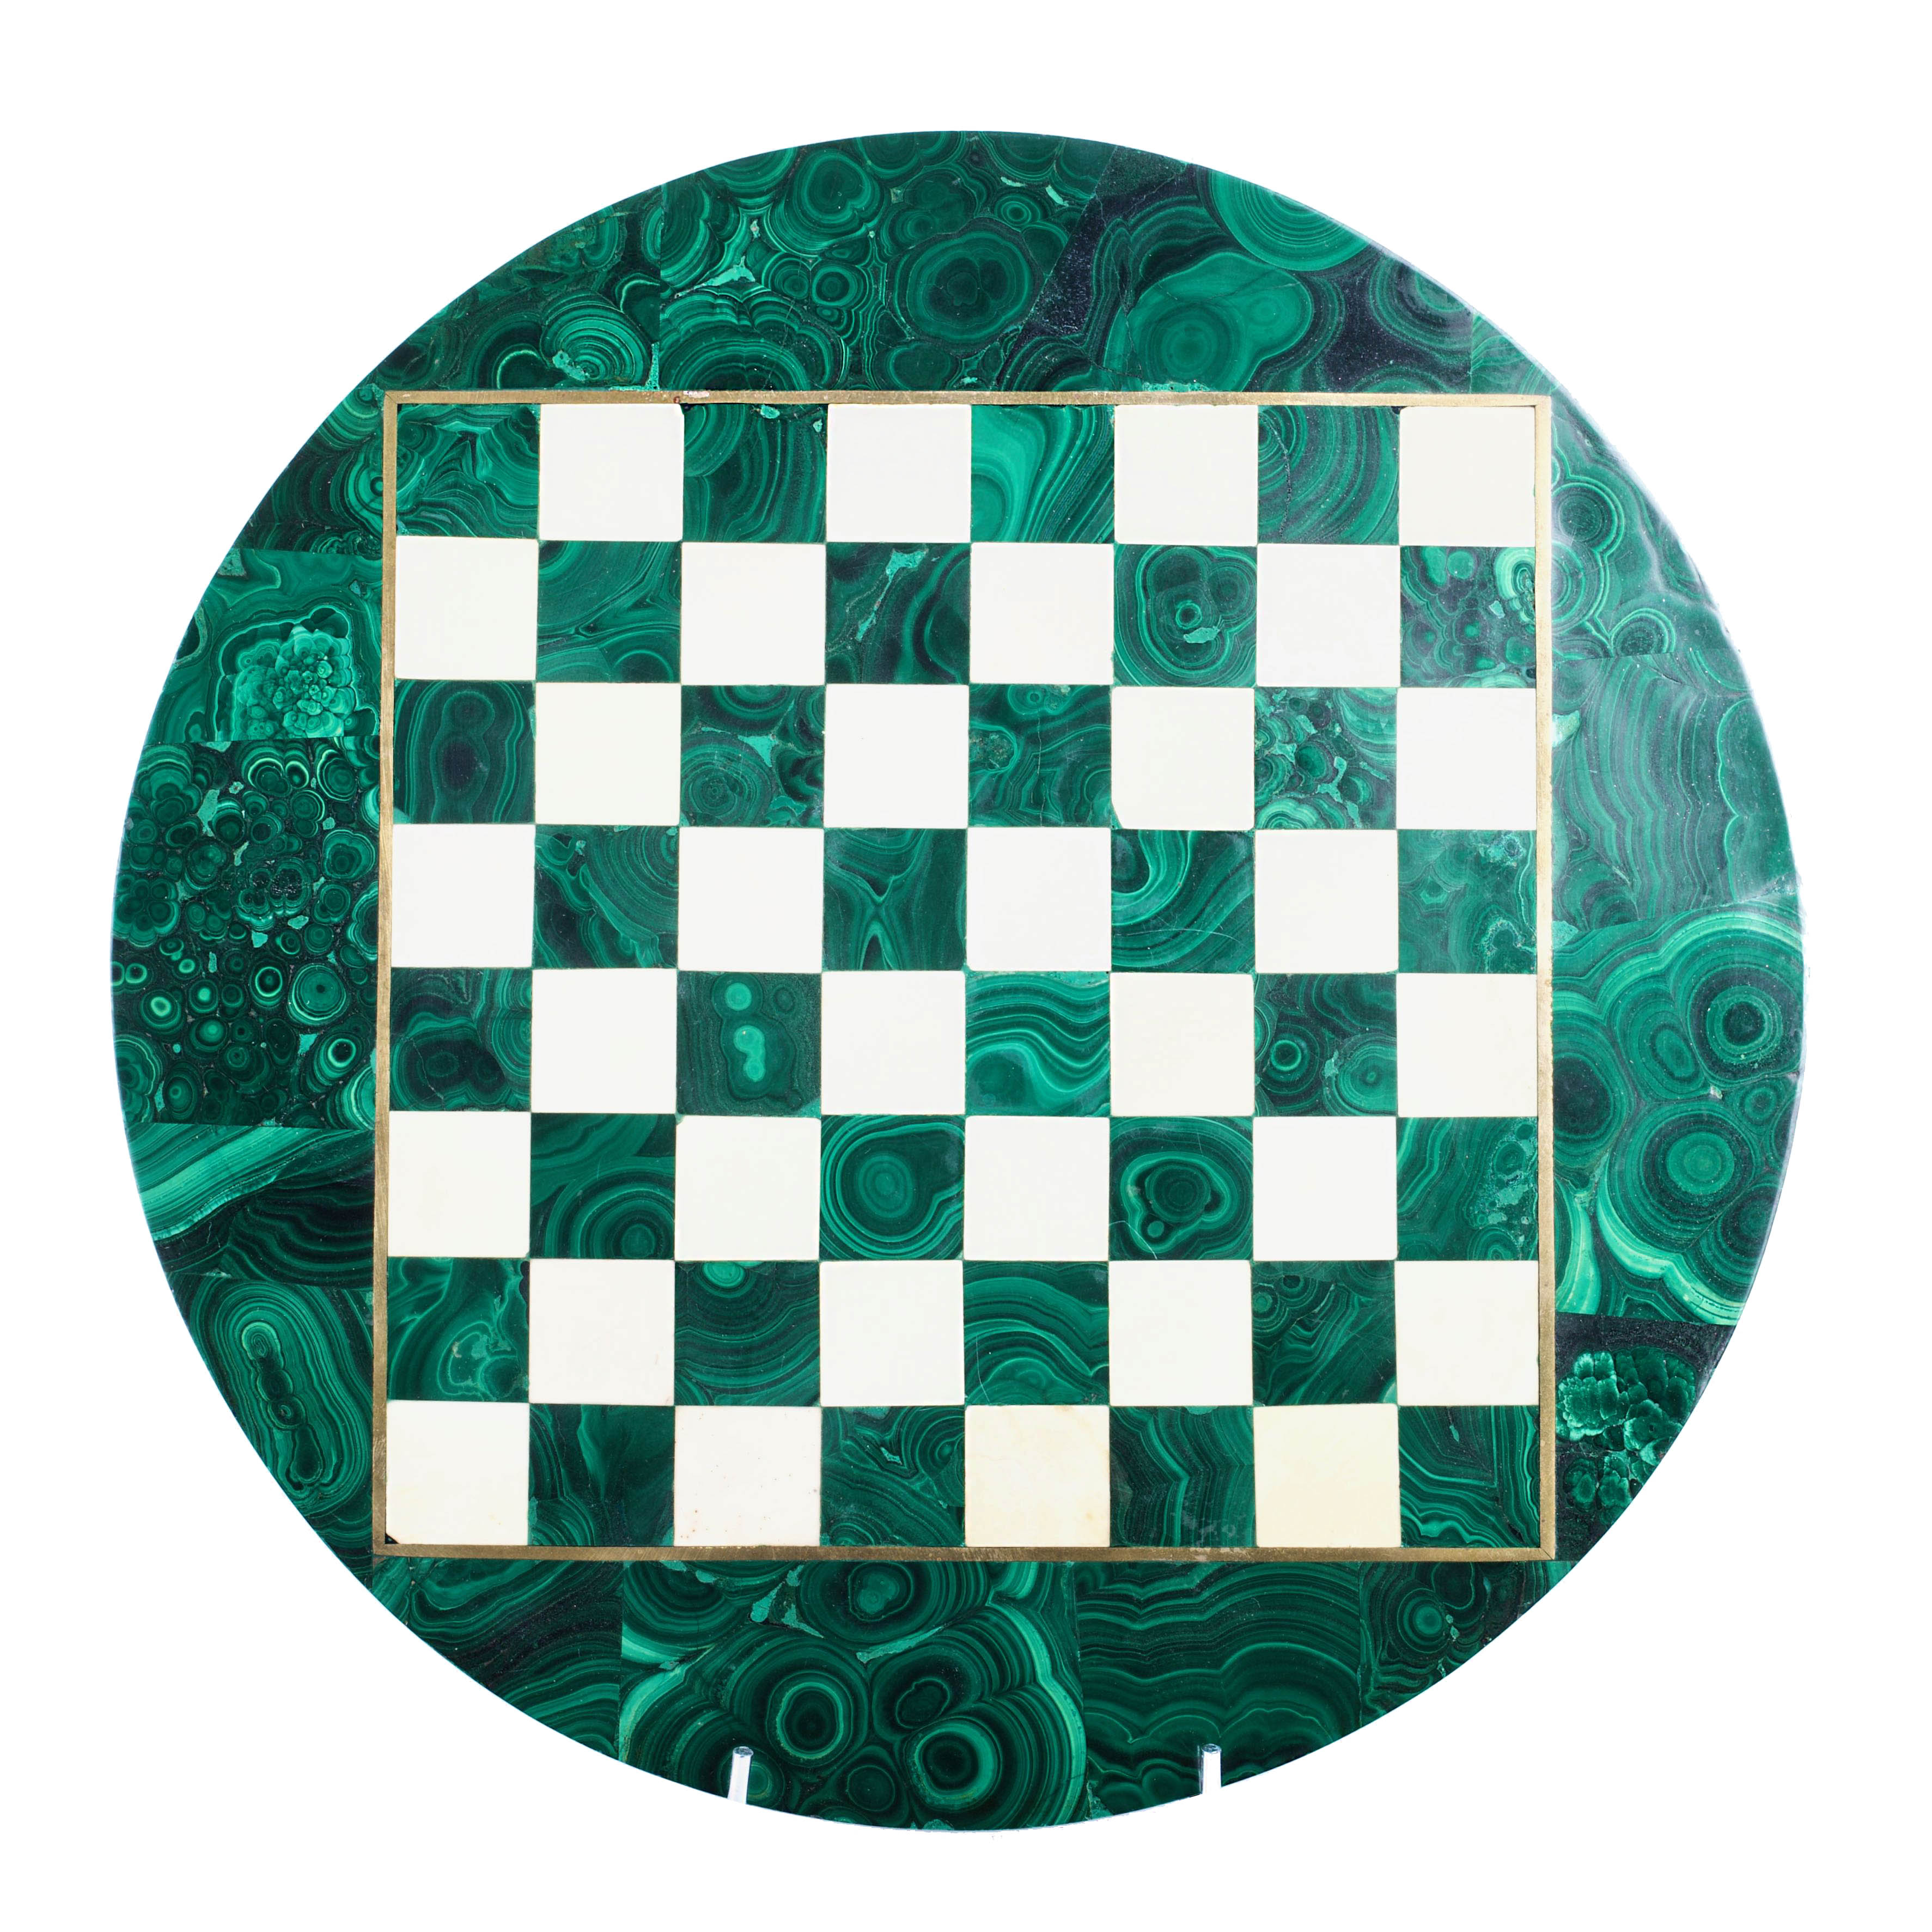 Chessboard. DC/nr740 доска шахматная. Круглая шахматная доска. Шахматы на круглых досках. Шахматное поле для печати.